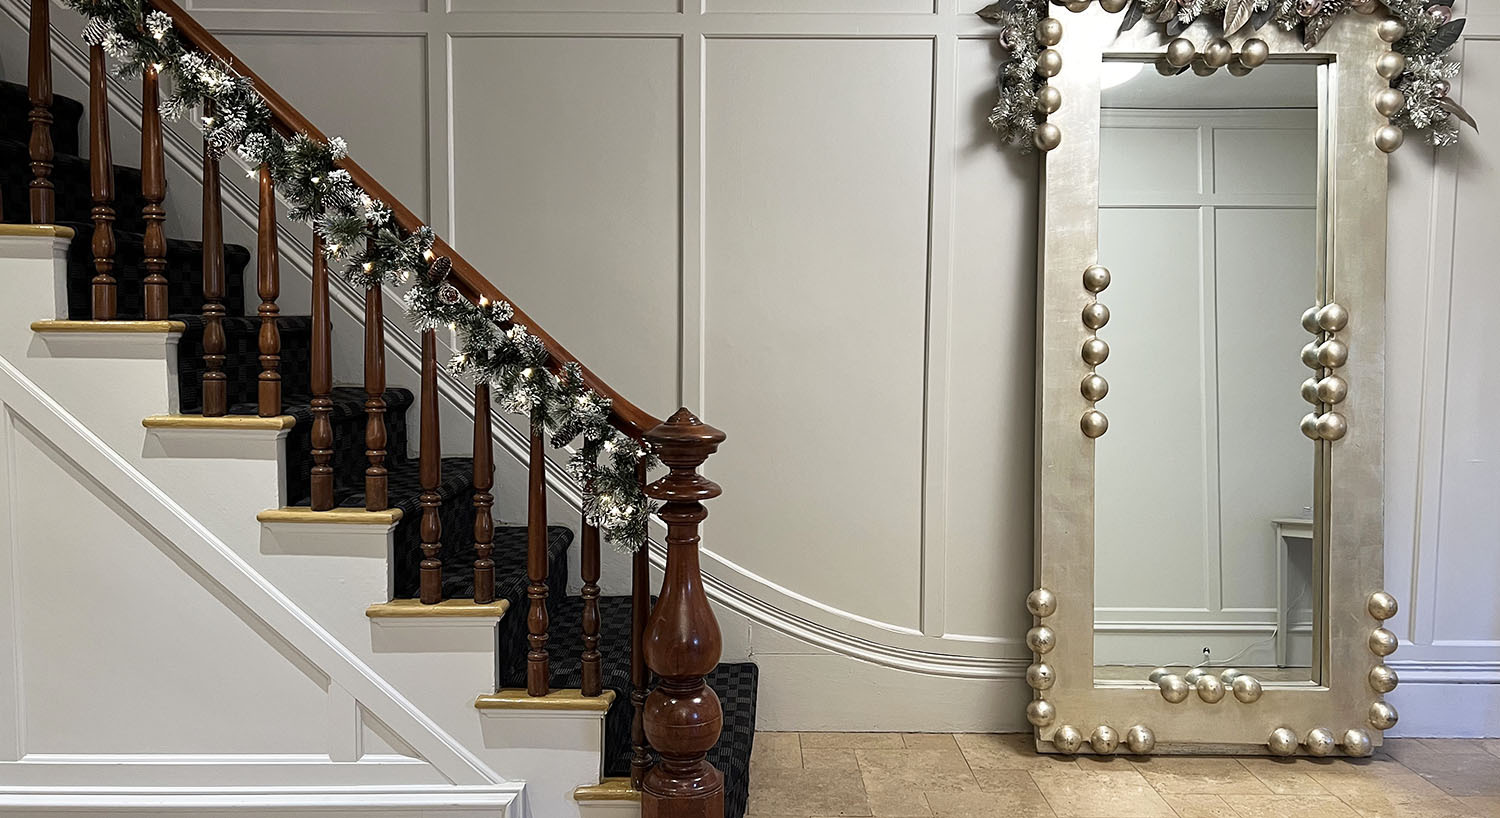 Historic interior staircase, mahogany railing with green garland, large silverleaf wall mirror with matching silver garland.